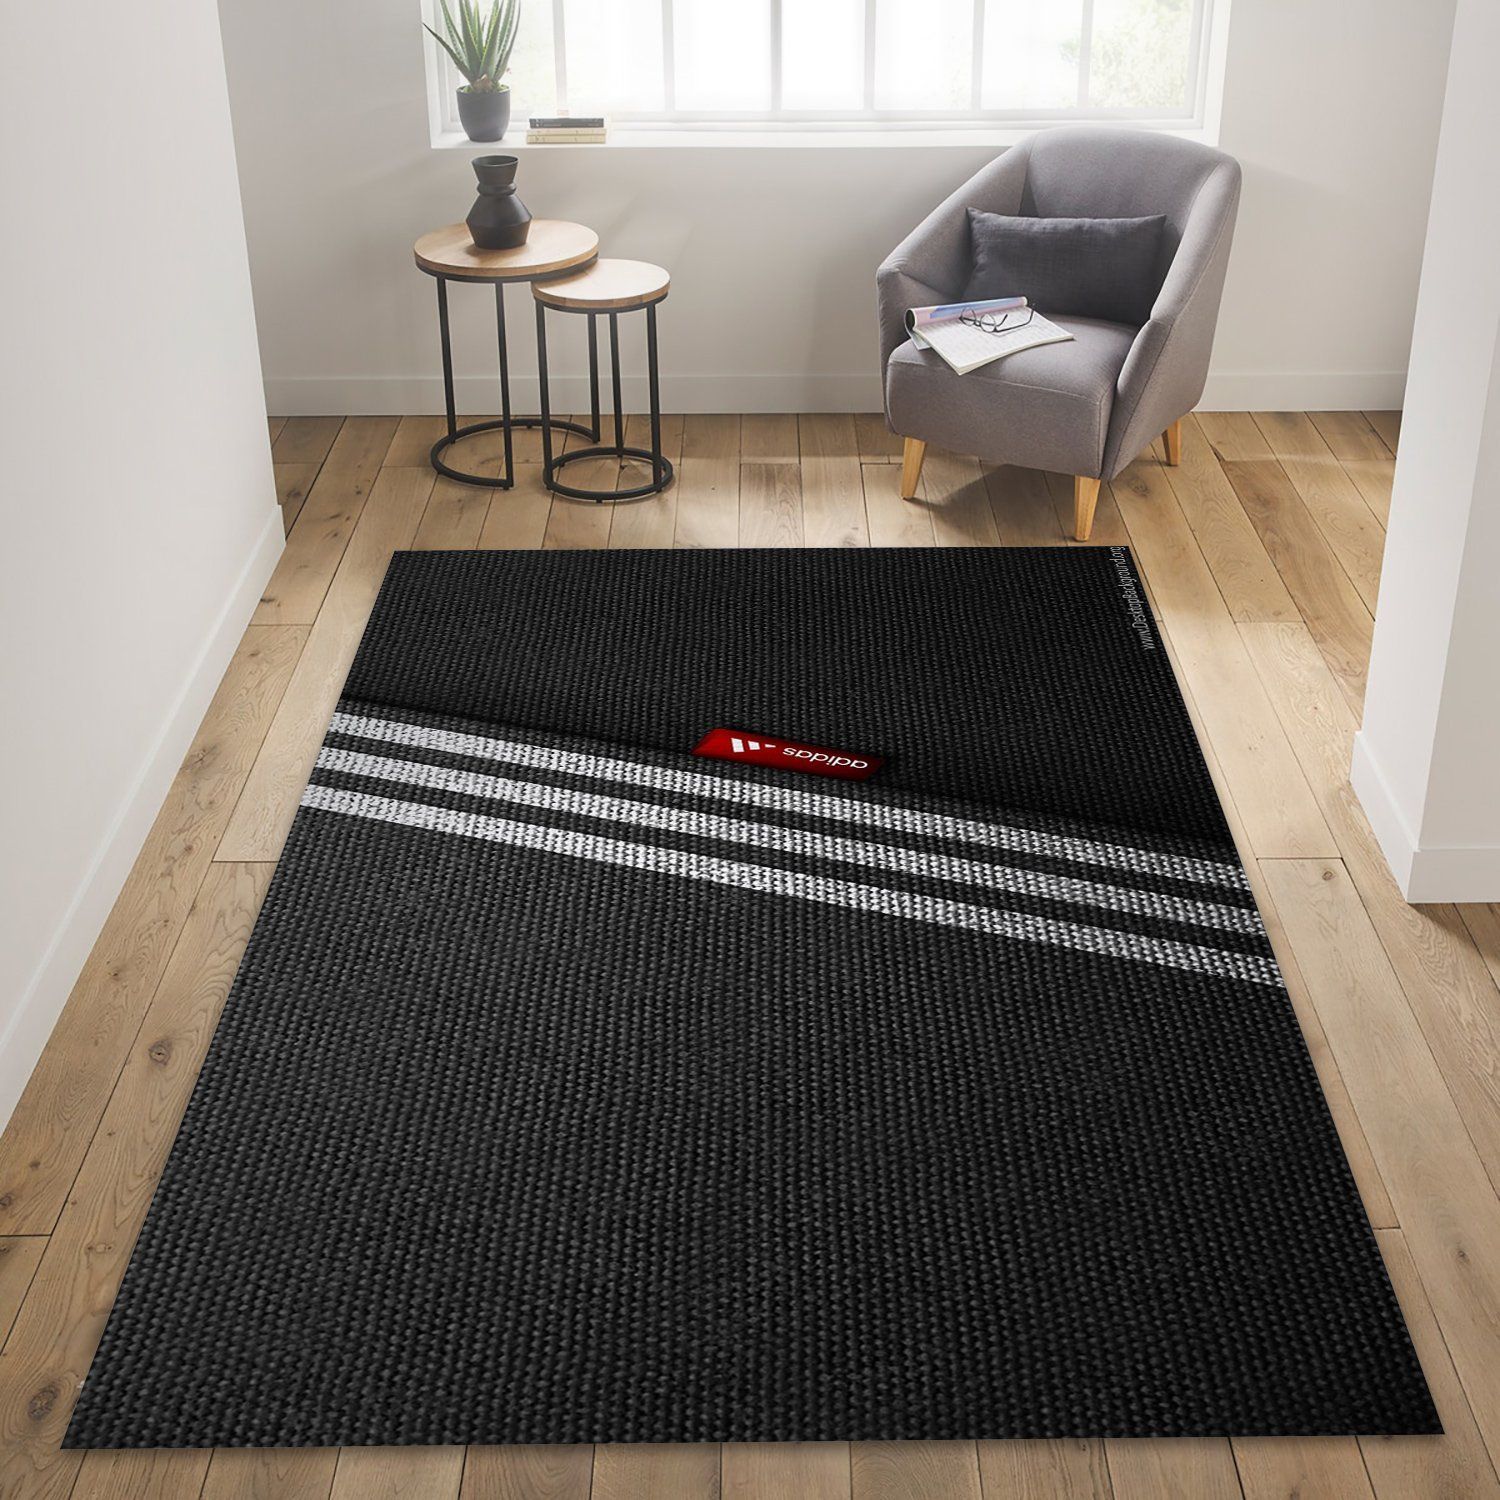 Luxury sport fashion brand Adidas Floor home decoration carpet rug